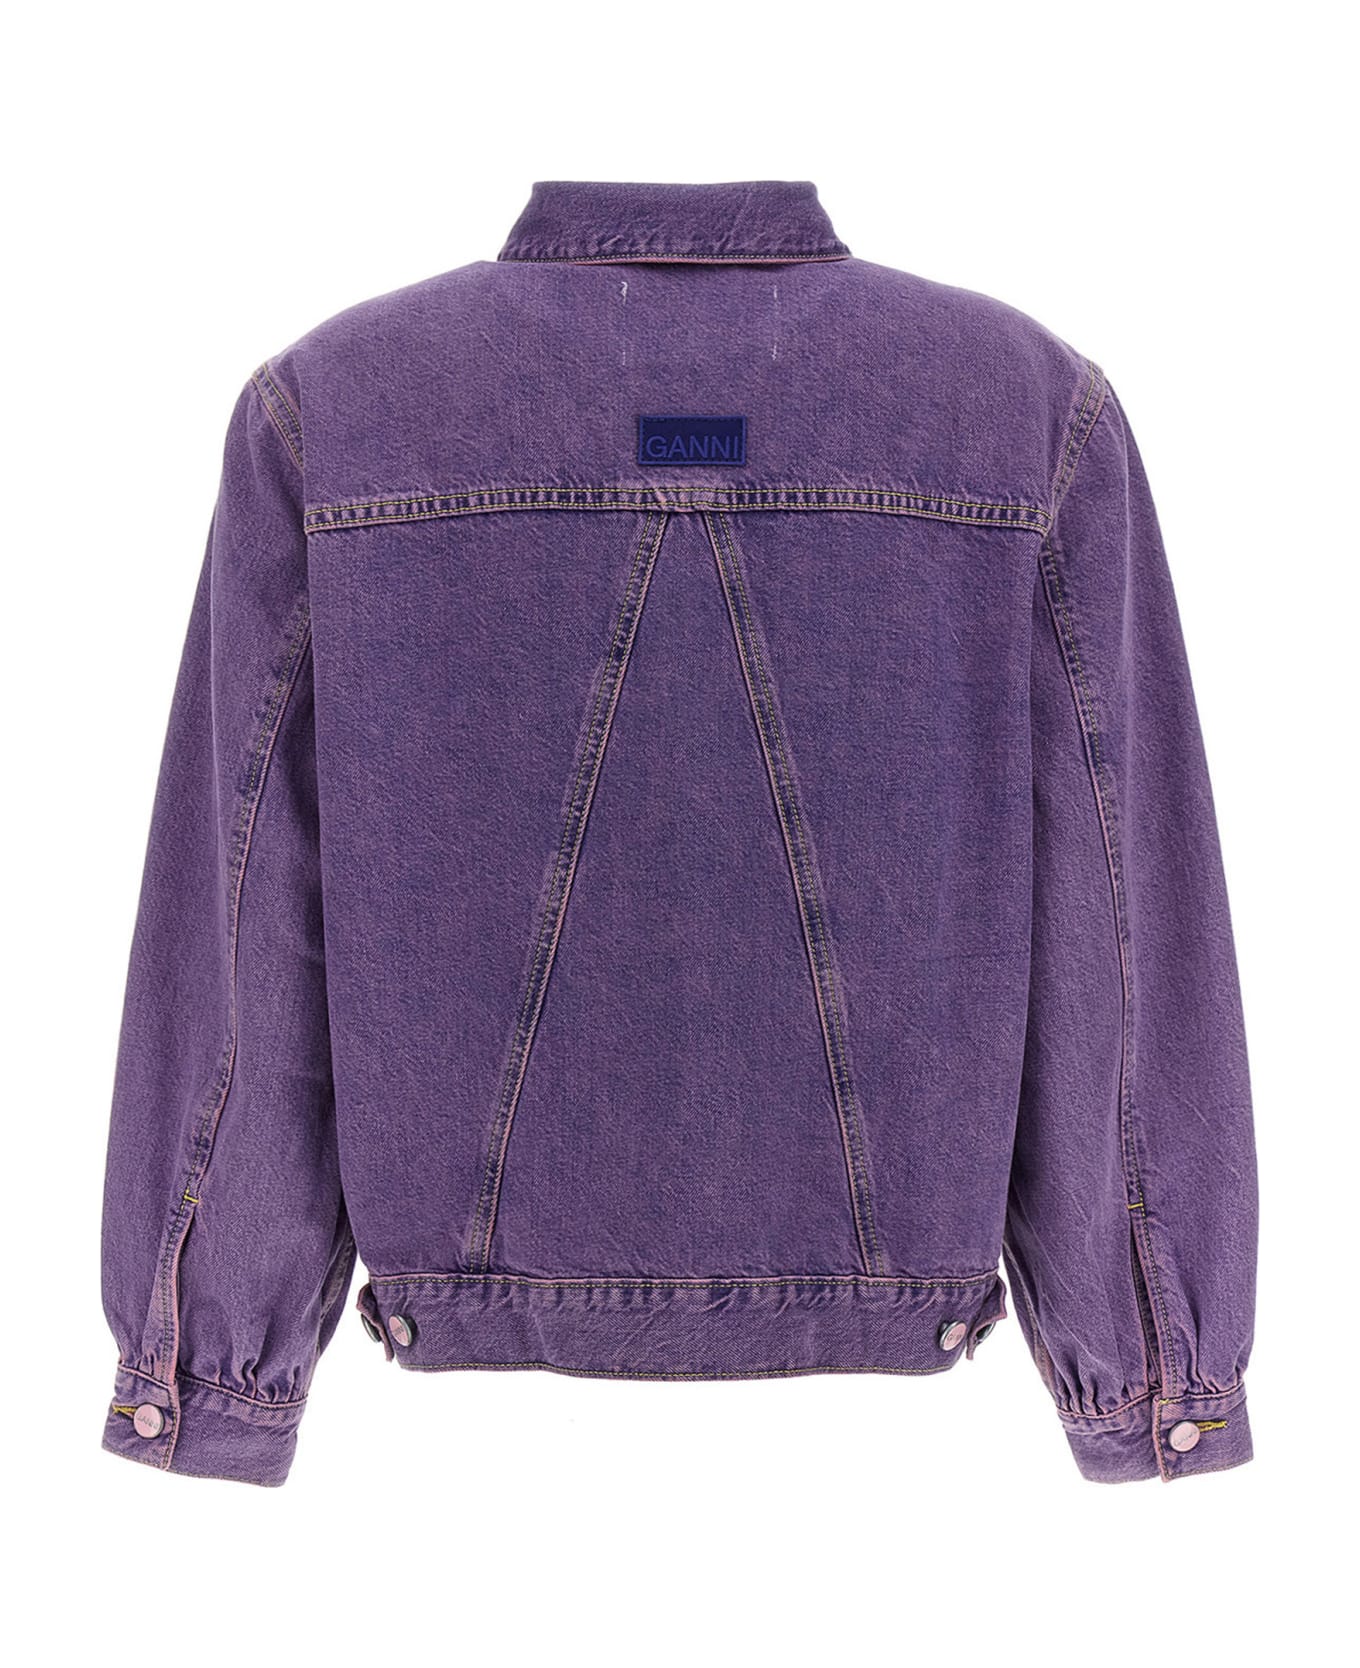 Ganni Overdyed Bleach Jacket - Purple